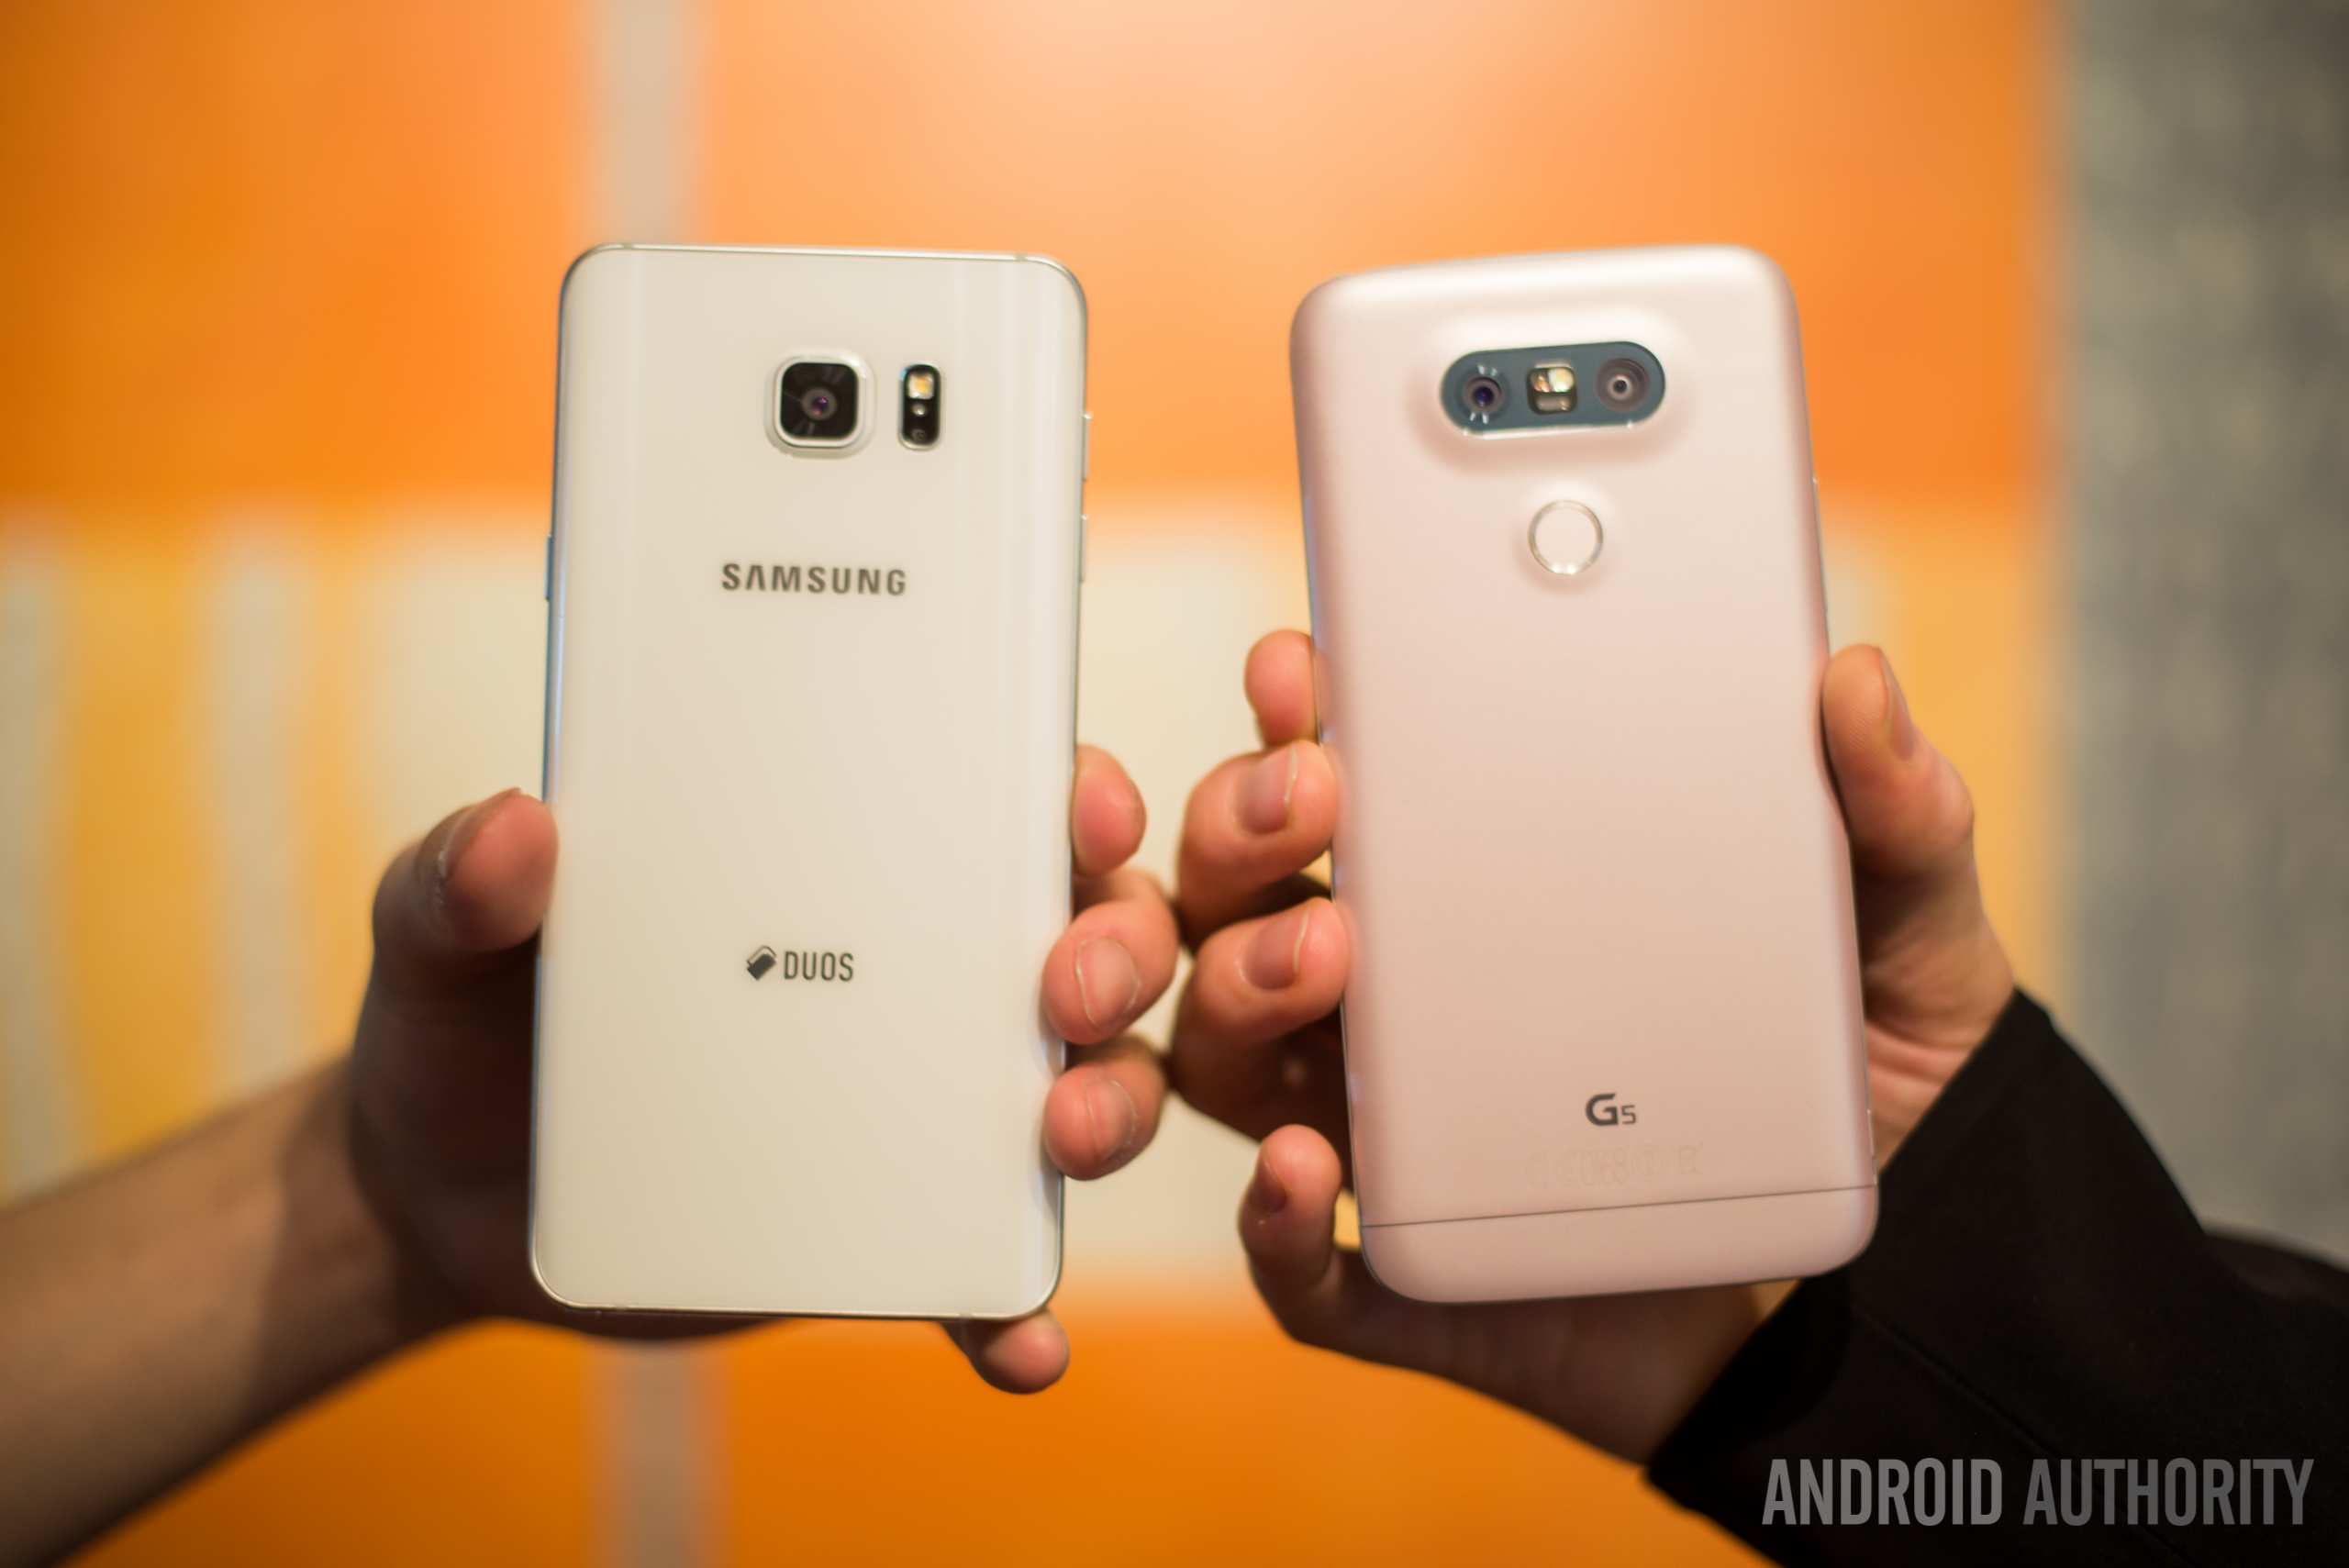 LG-G5-vs-Samsung-Galaxy-Note-5-7